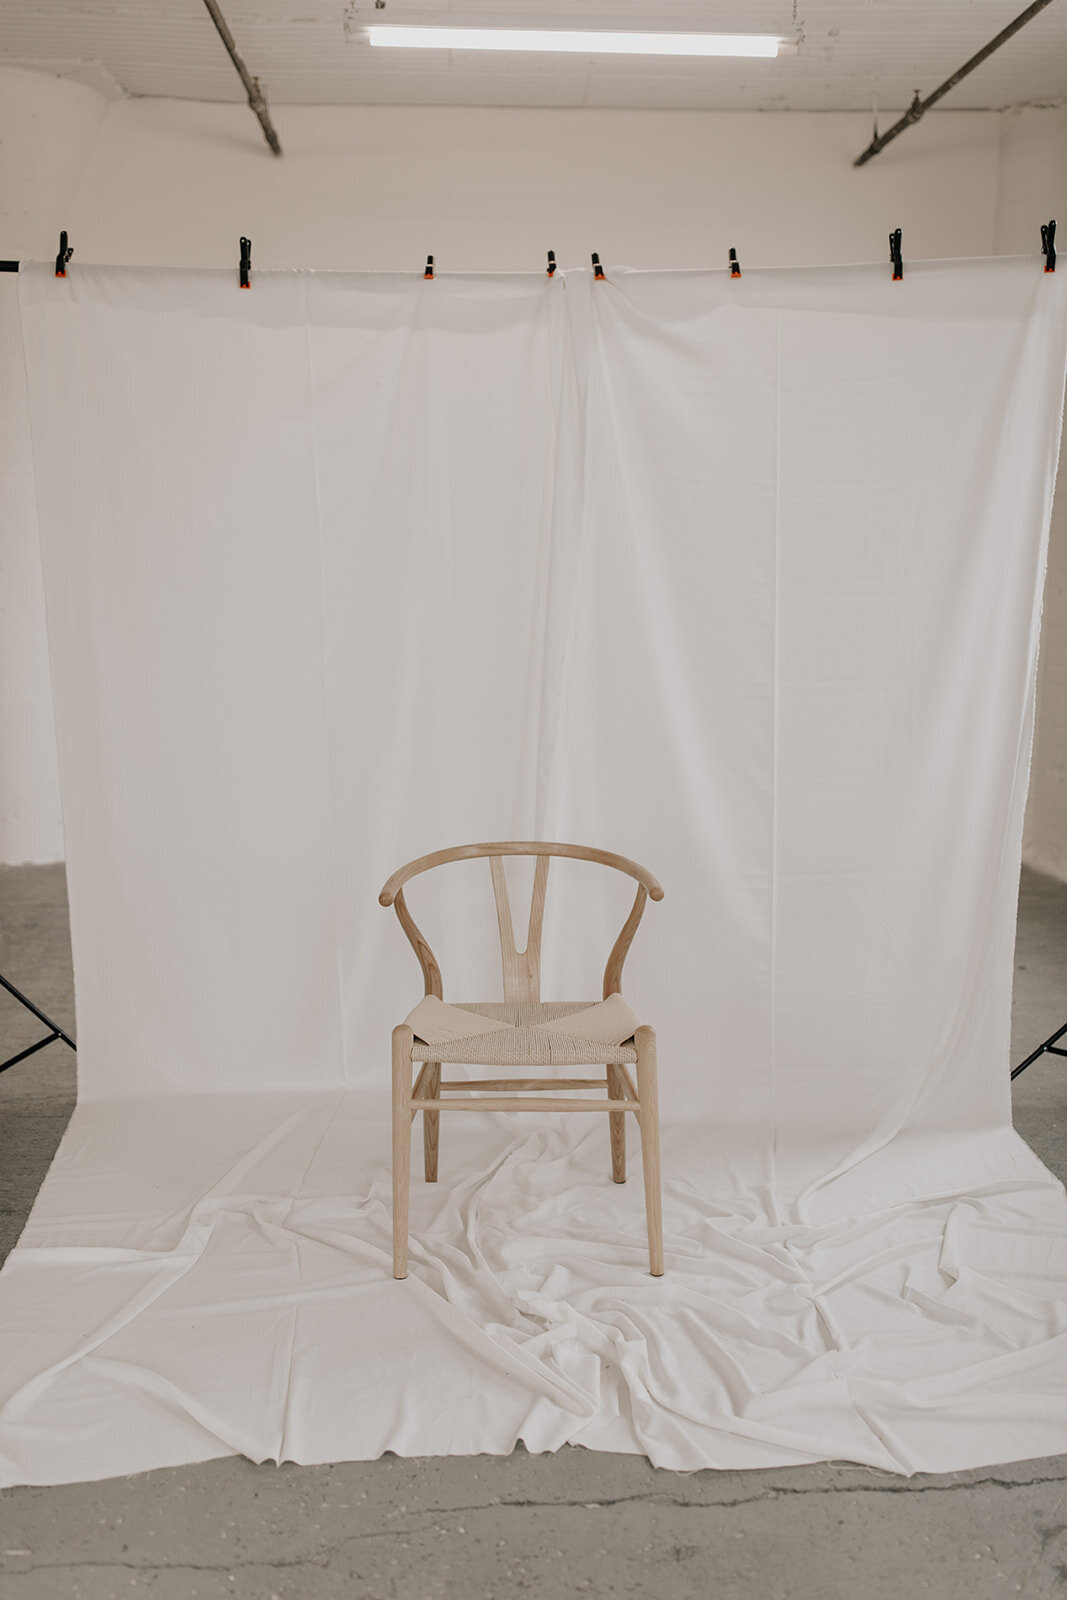 Wicker chair at modern photo studio in St Paul, Minnesota